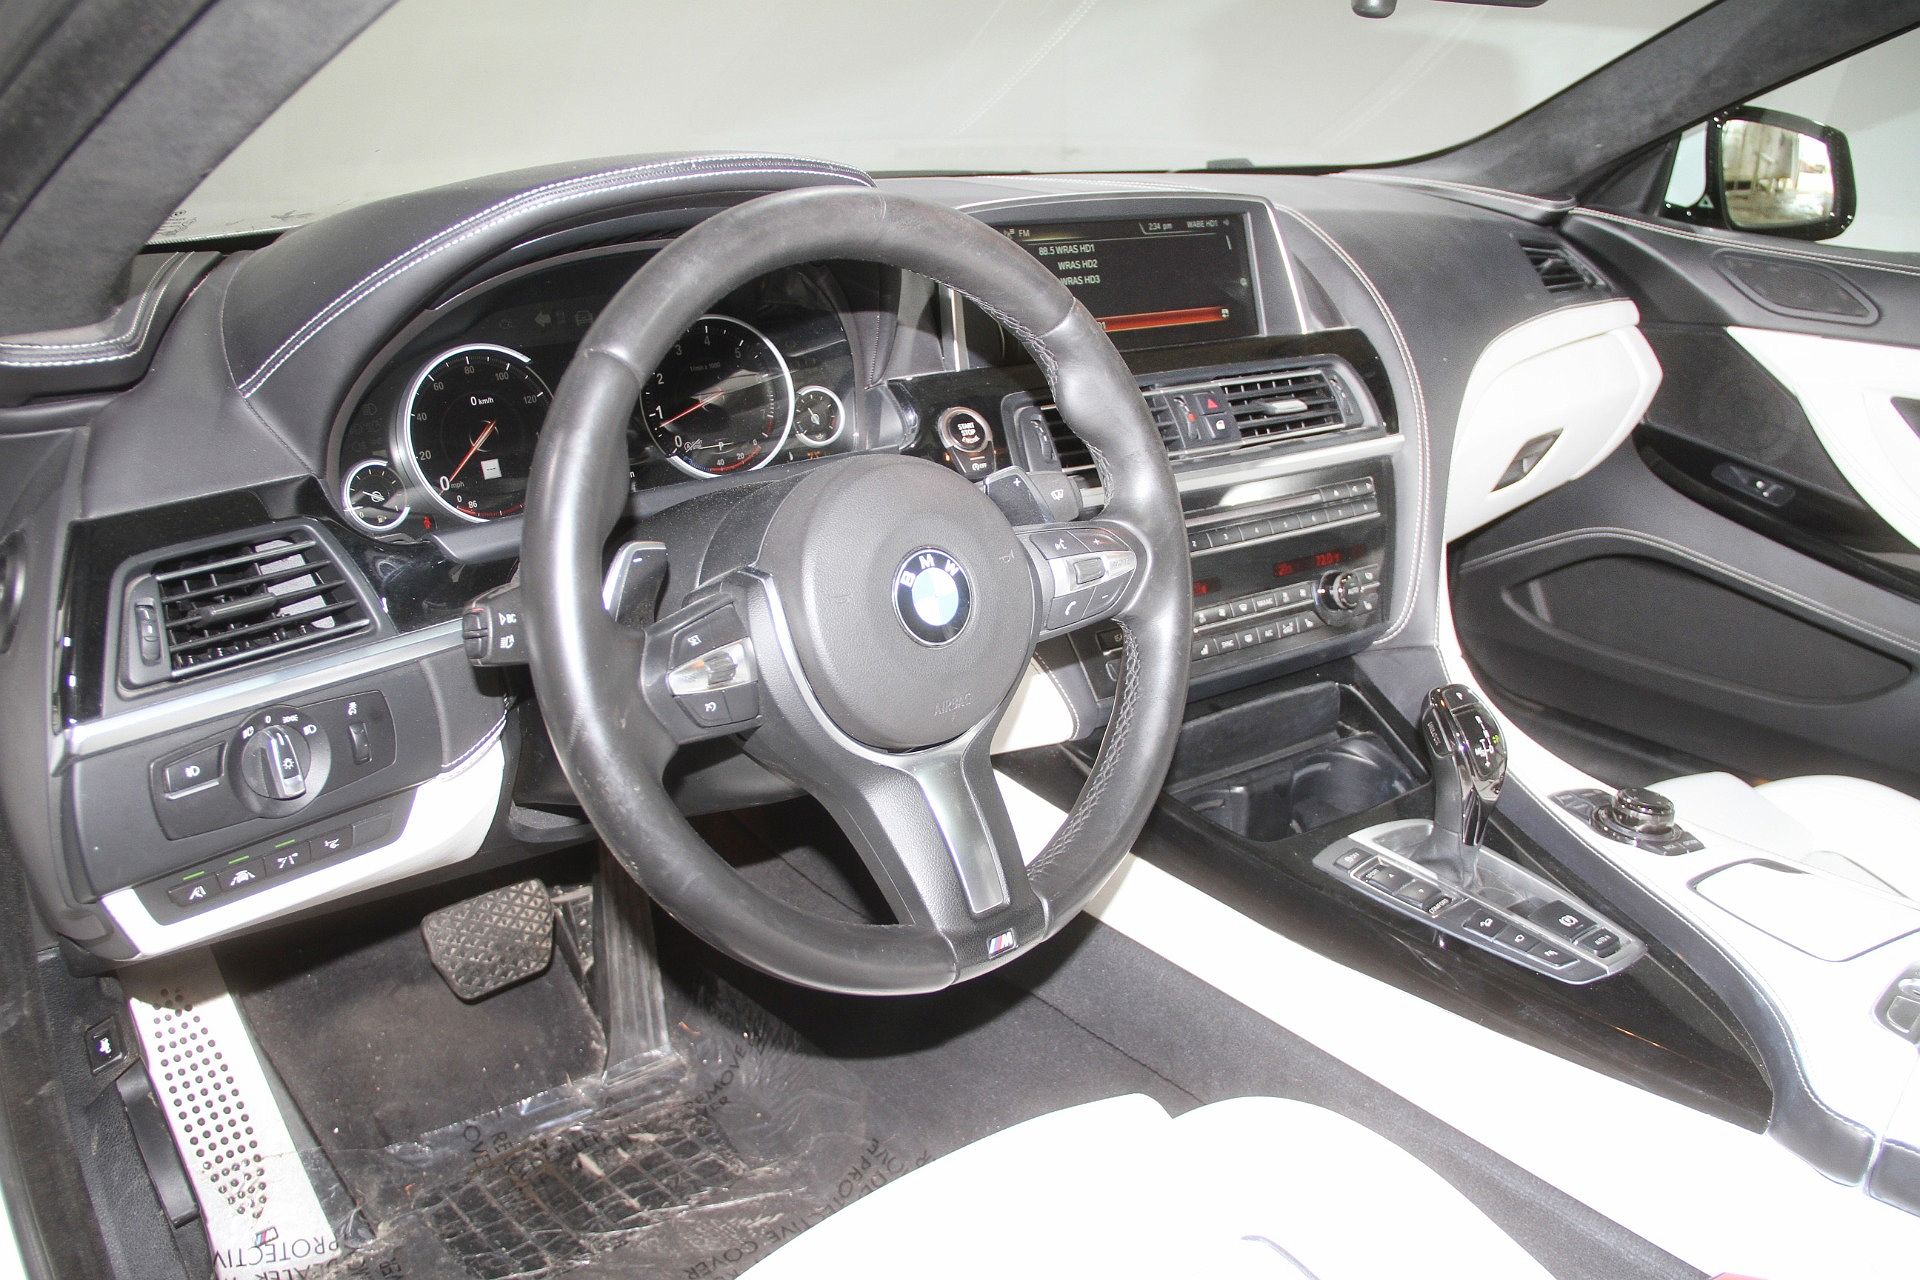 2014 BMW 6 Series 650i xDrive image 22